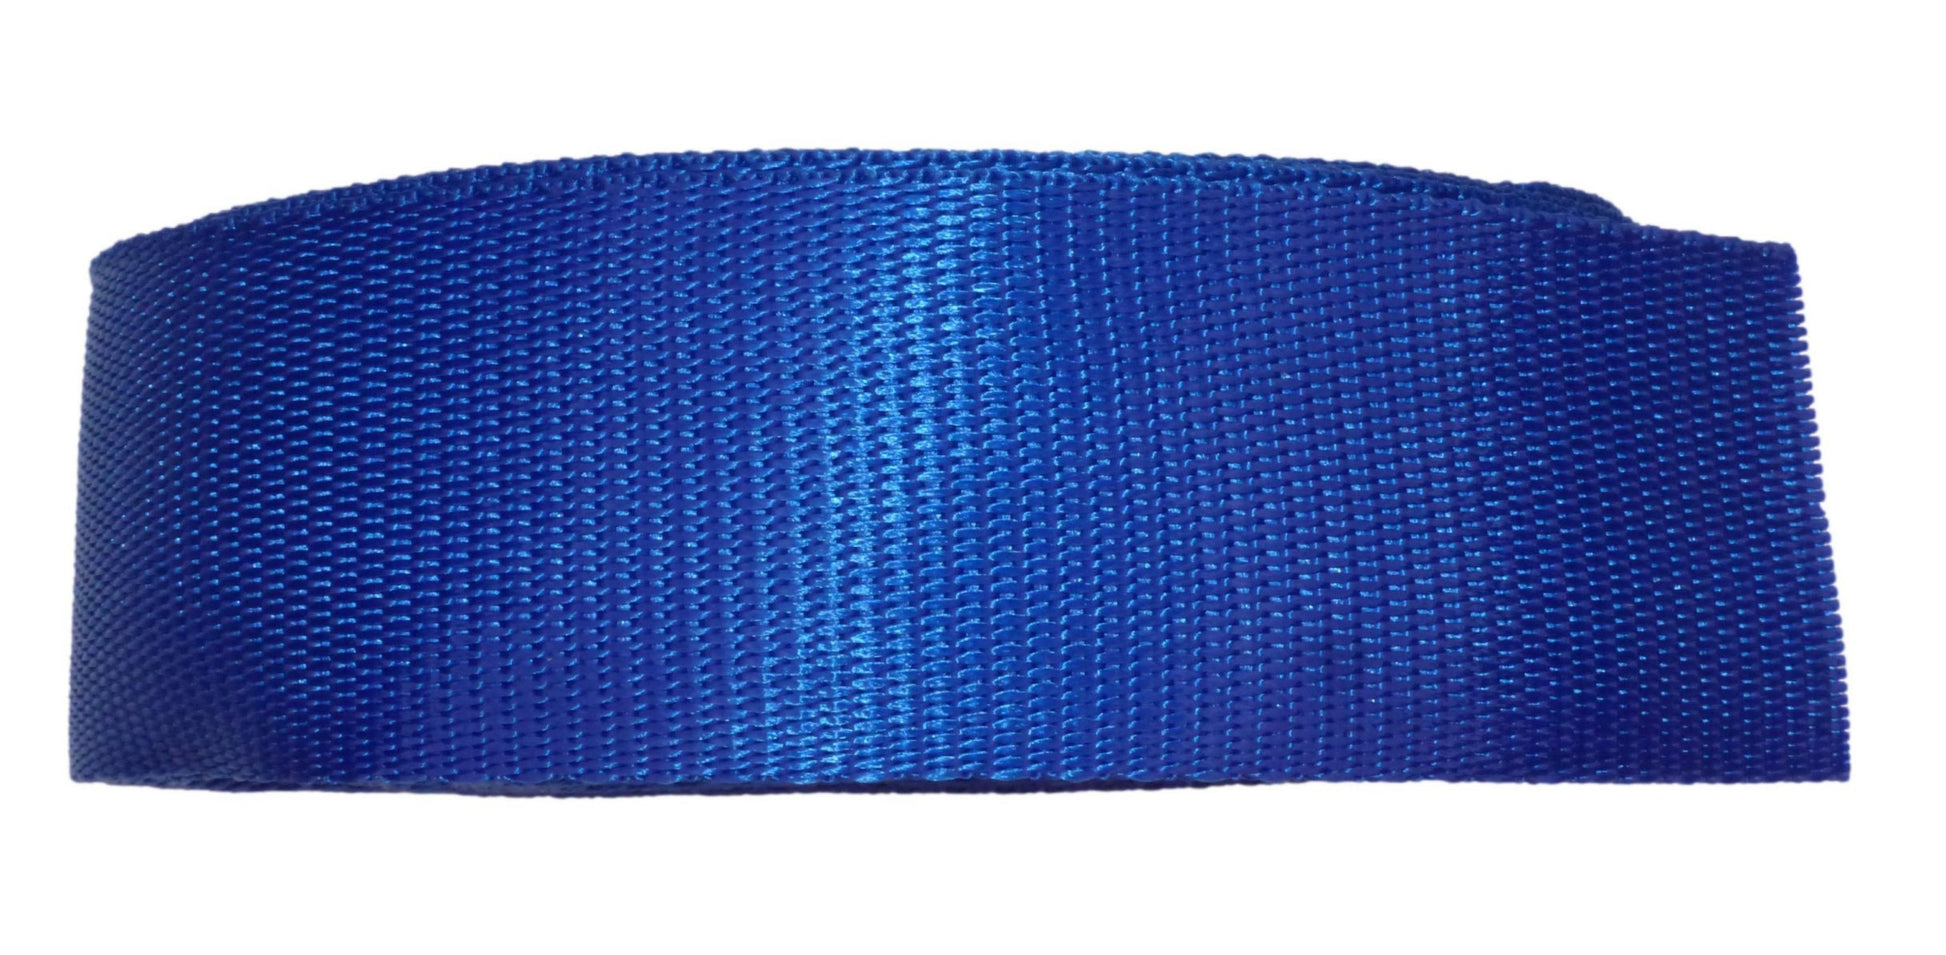 Benristraps 50mm (2") Polypropylene Webbing, 10 Metre (32') Roll in blue